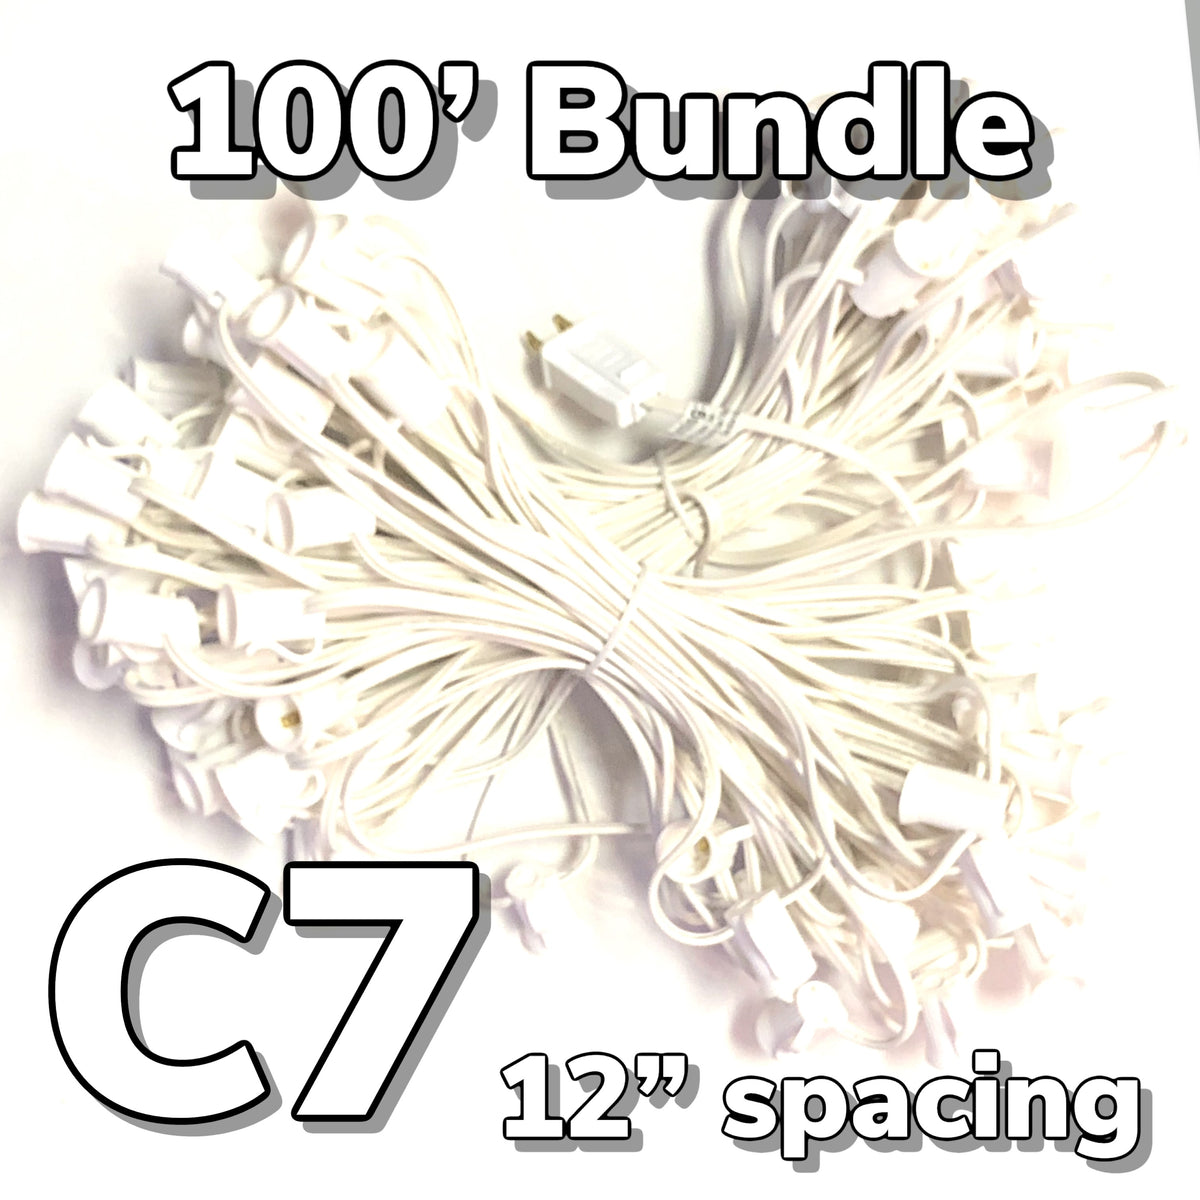 12" Spacing 100' Long C7 Cord